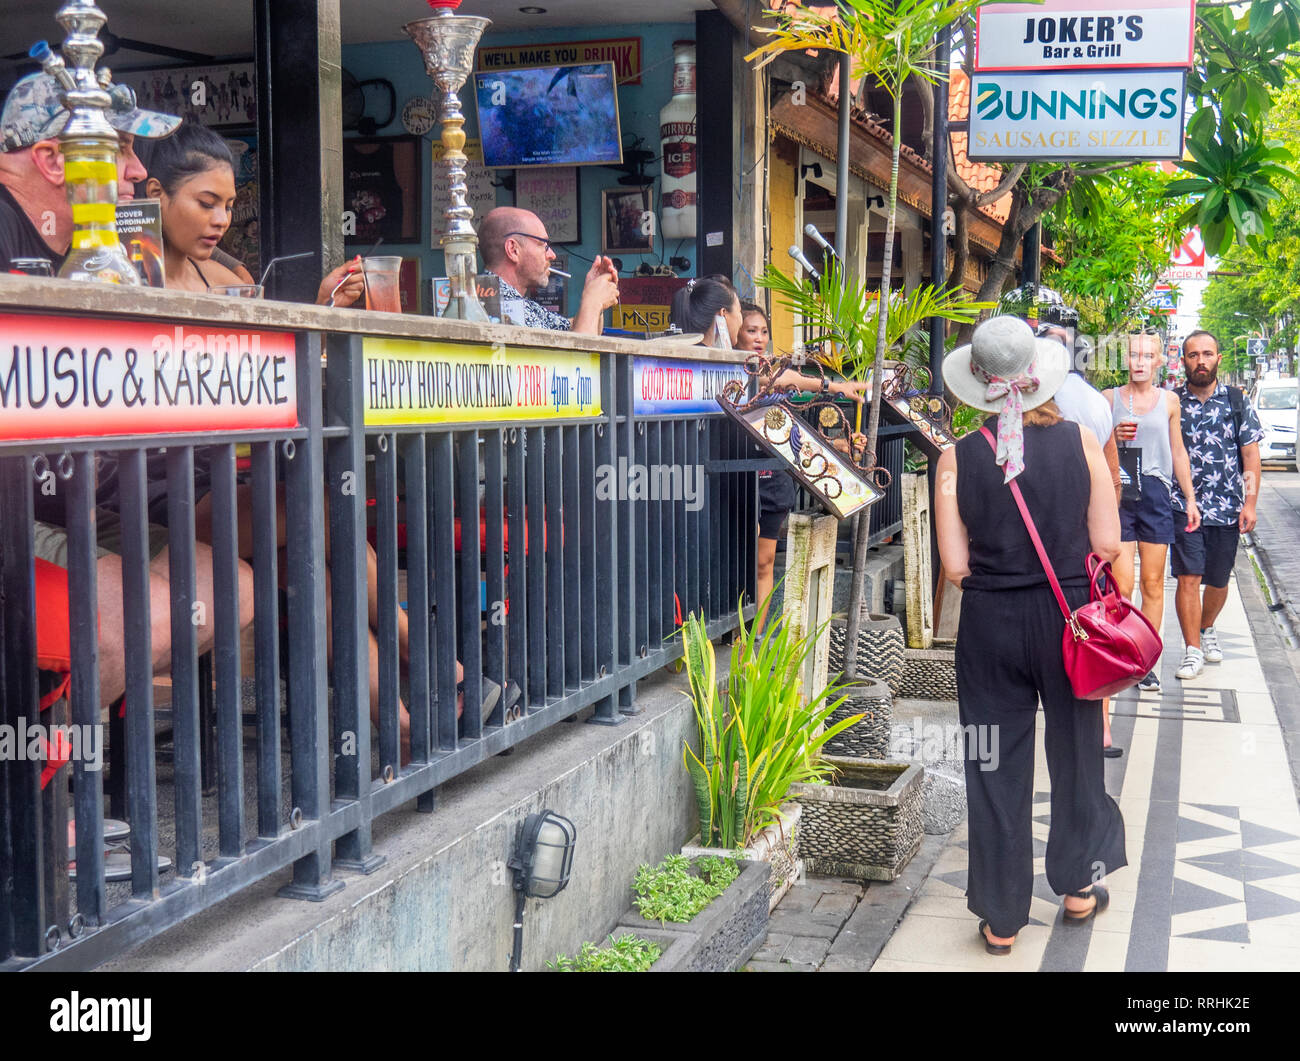 Australian tourists walking past the Joker's Bar & Grill on Jl Raya Legian, Kuta Bali Indonesia. Stock Photo